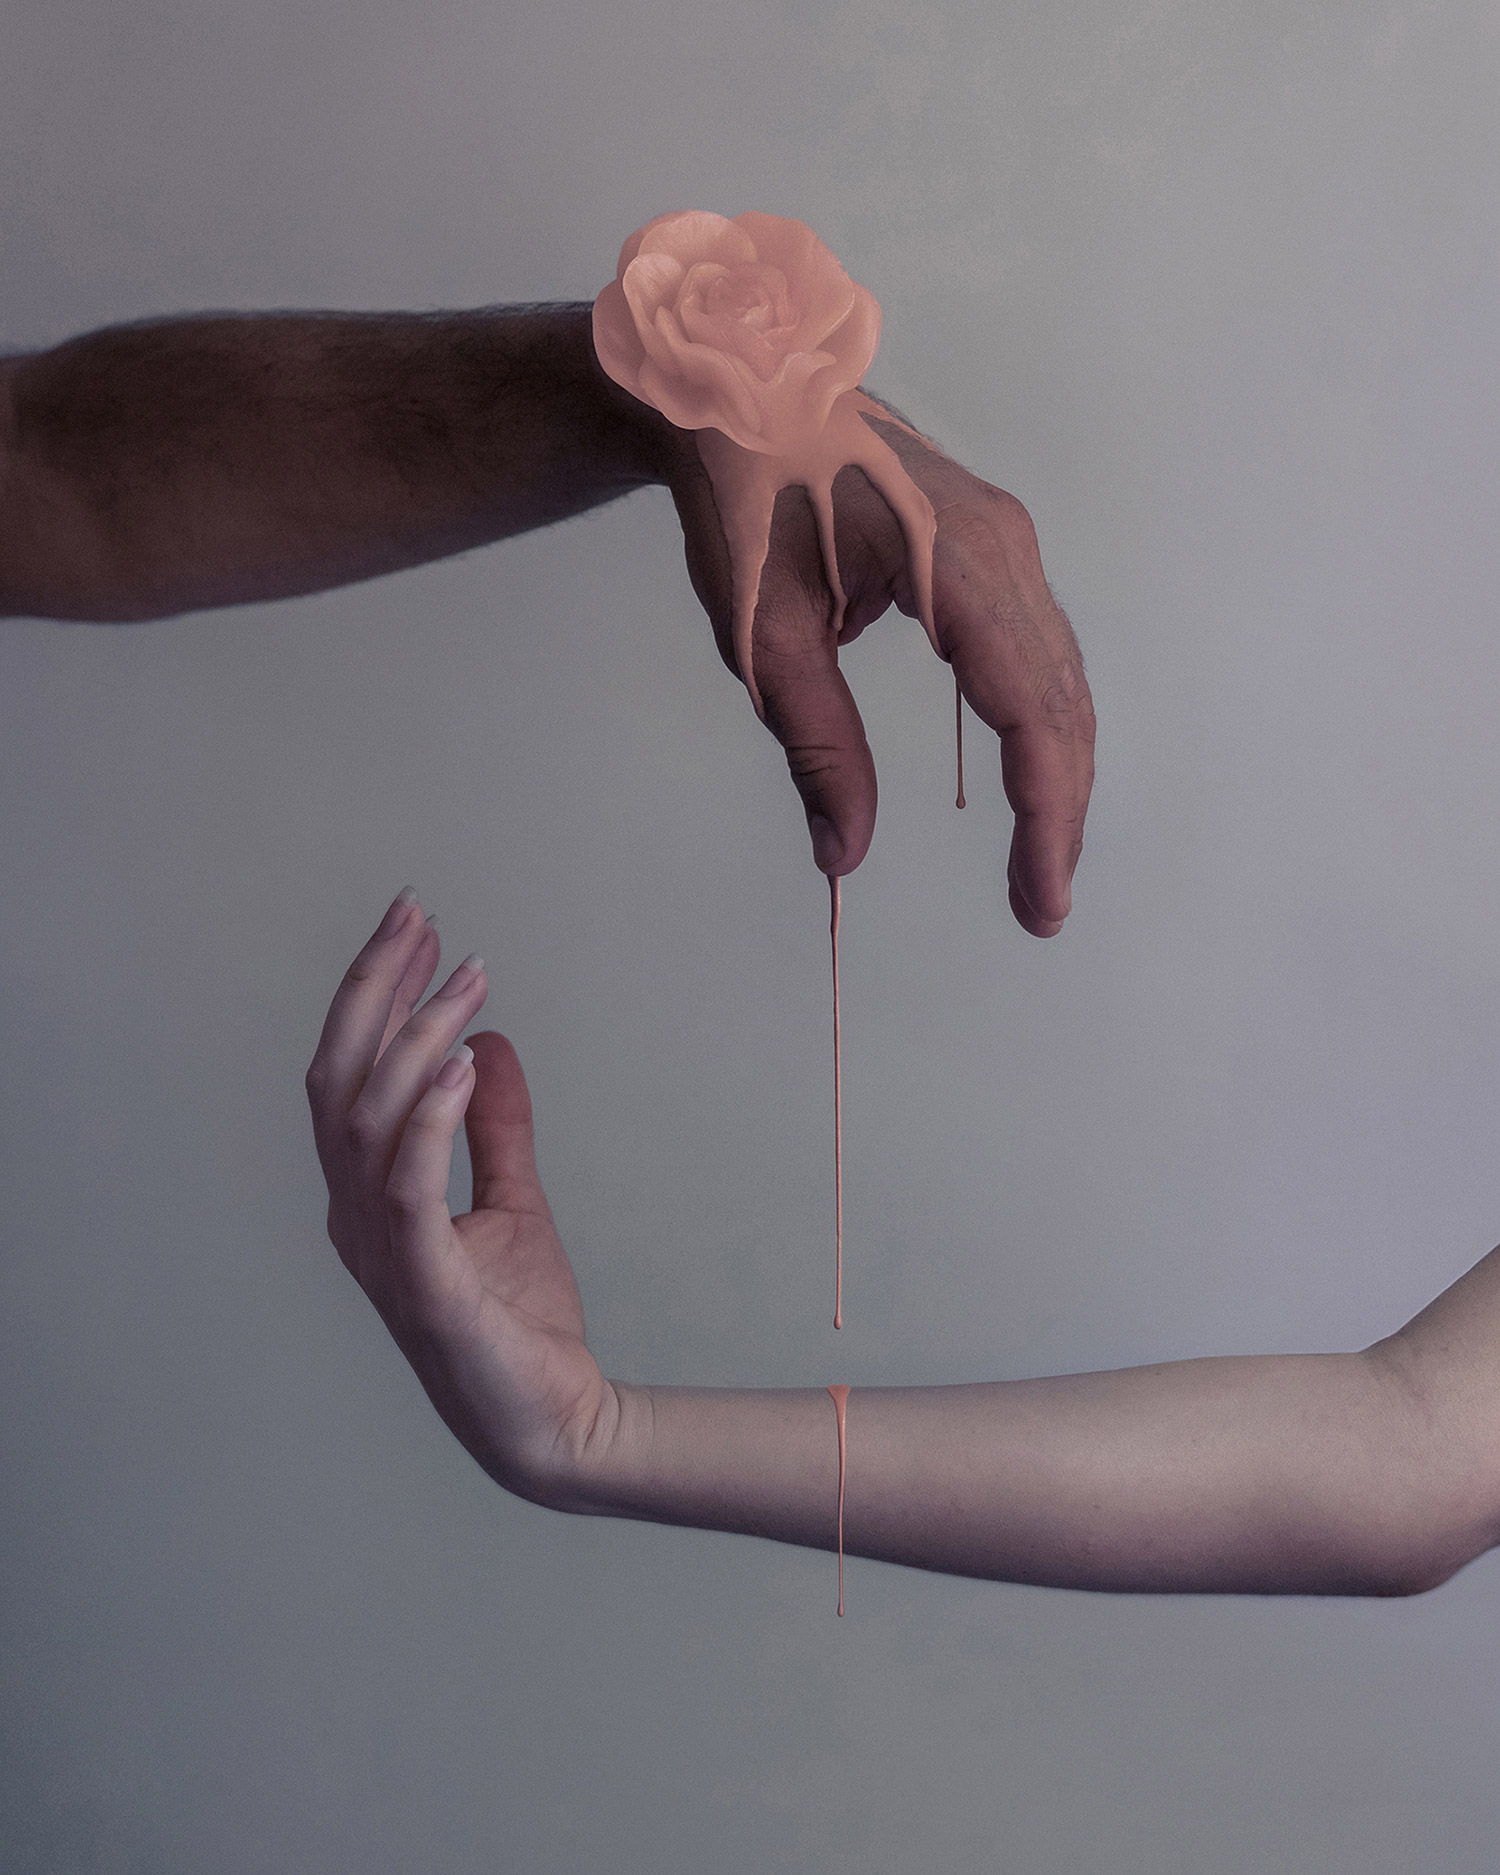 Brooke DiDonato, Roses - wrist roses